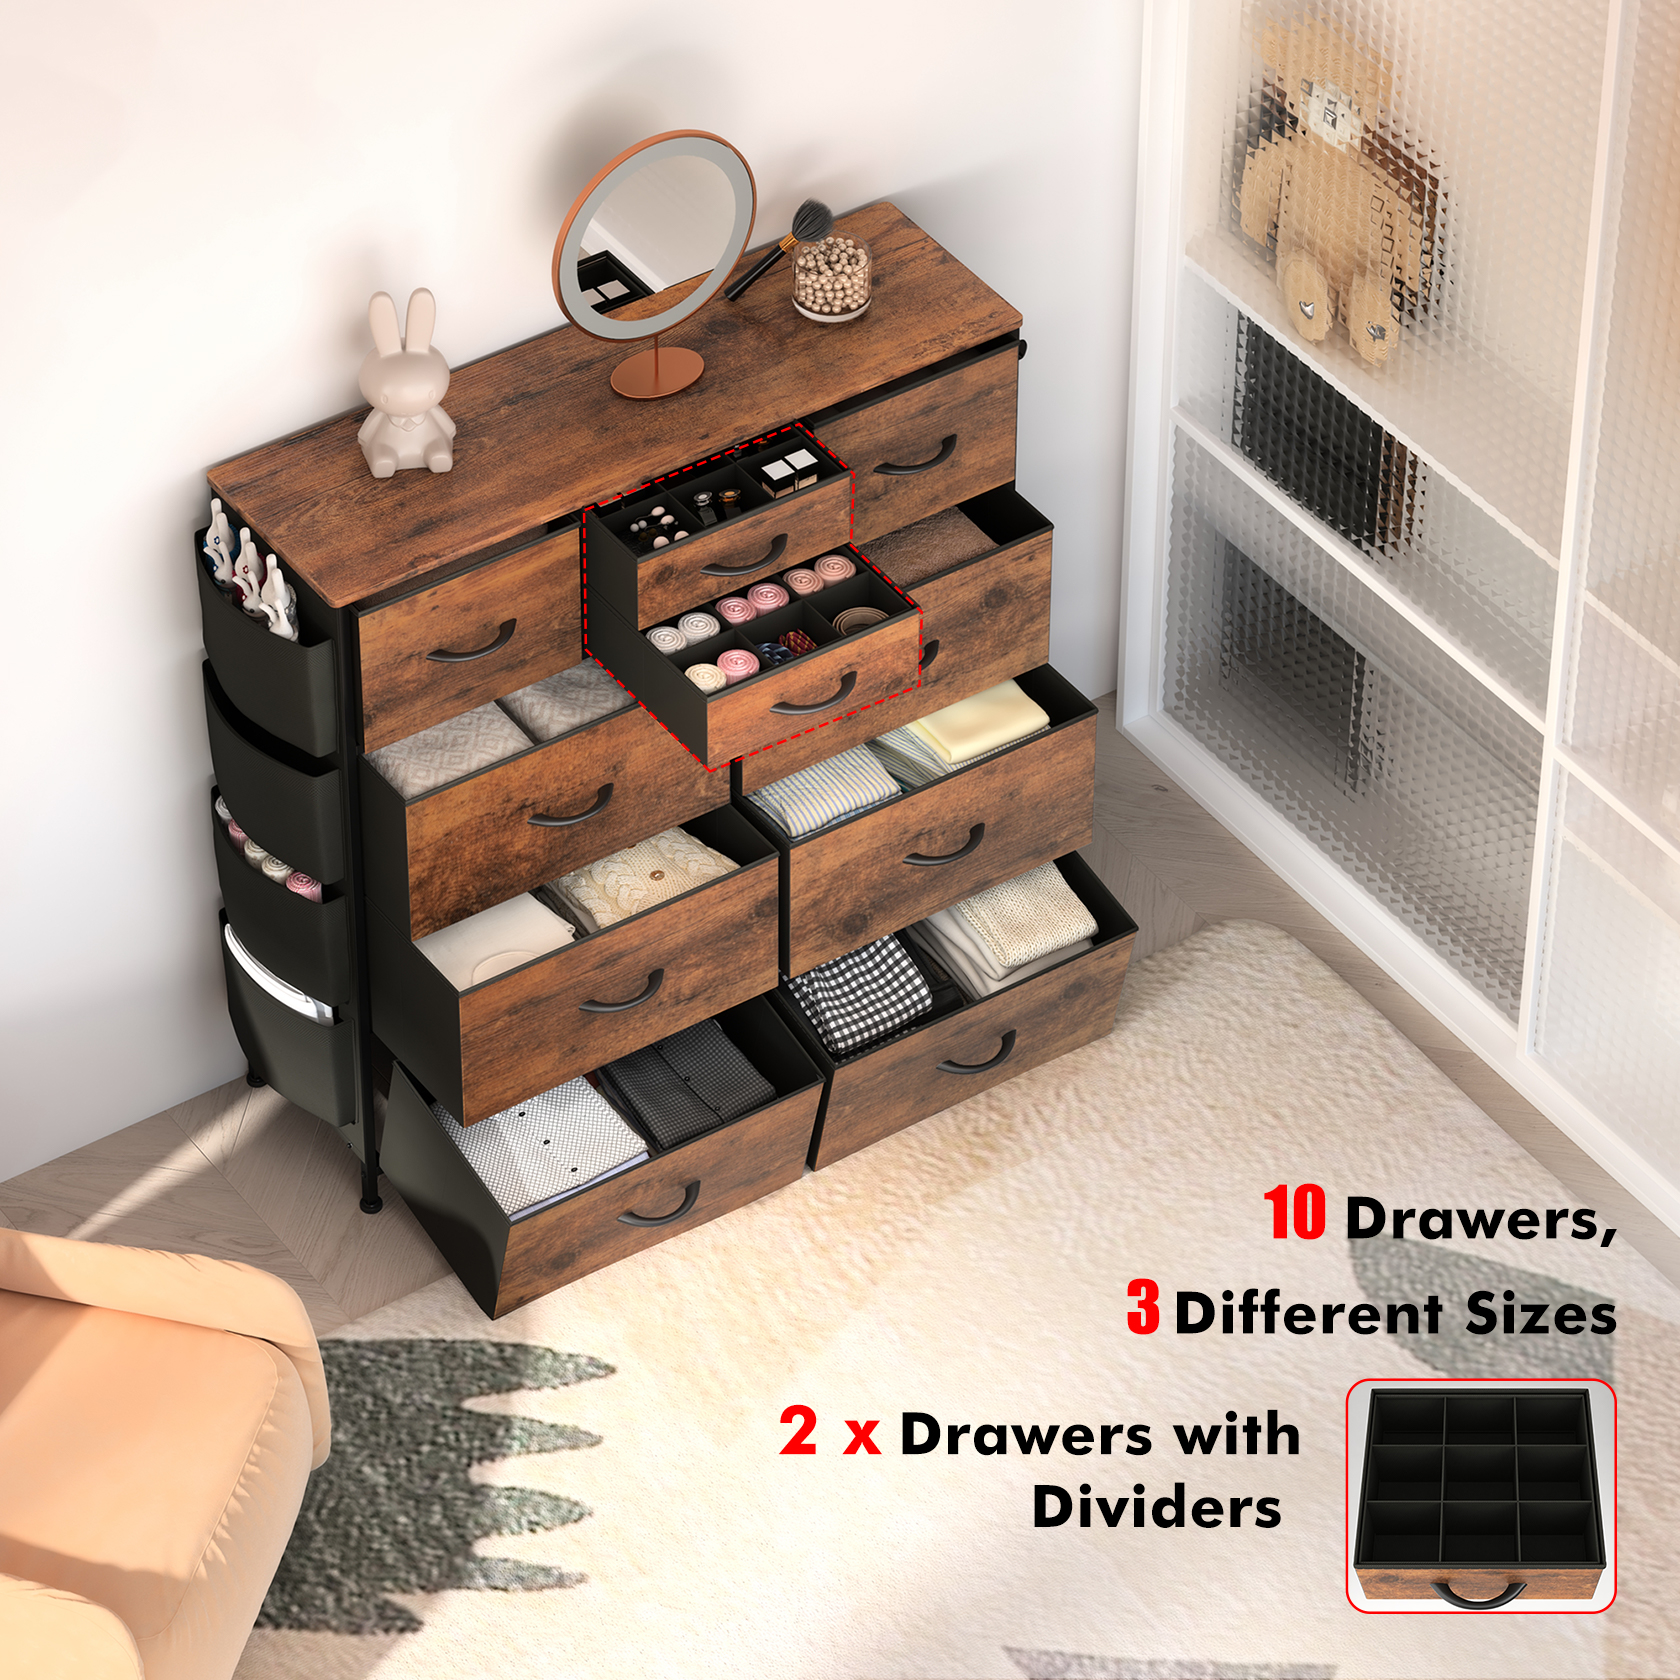 Wostoo Modern Drawer Dresser,10-Drawers Chest with Side Pockets Hooks Fabric Storage Dresser for Bedroom Living Room Brown - image 3 of 7